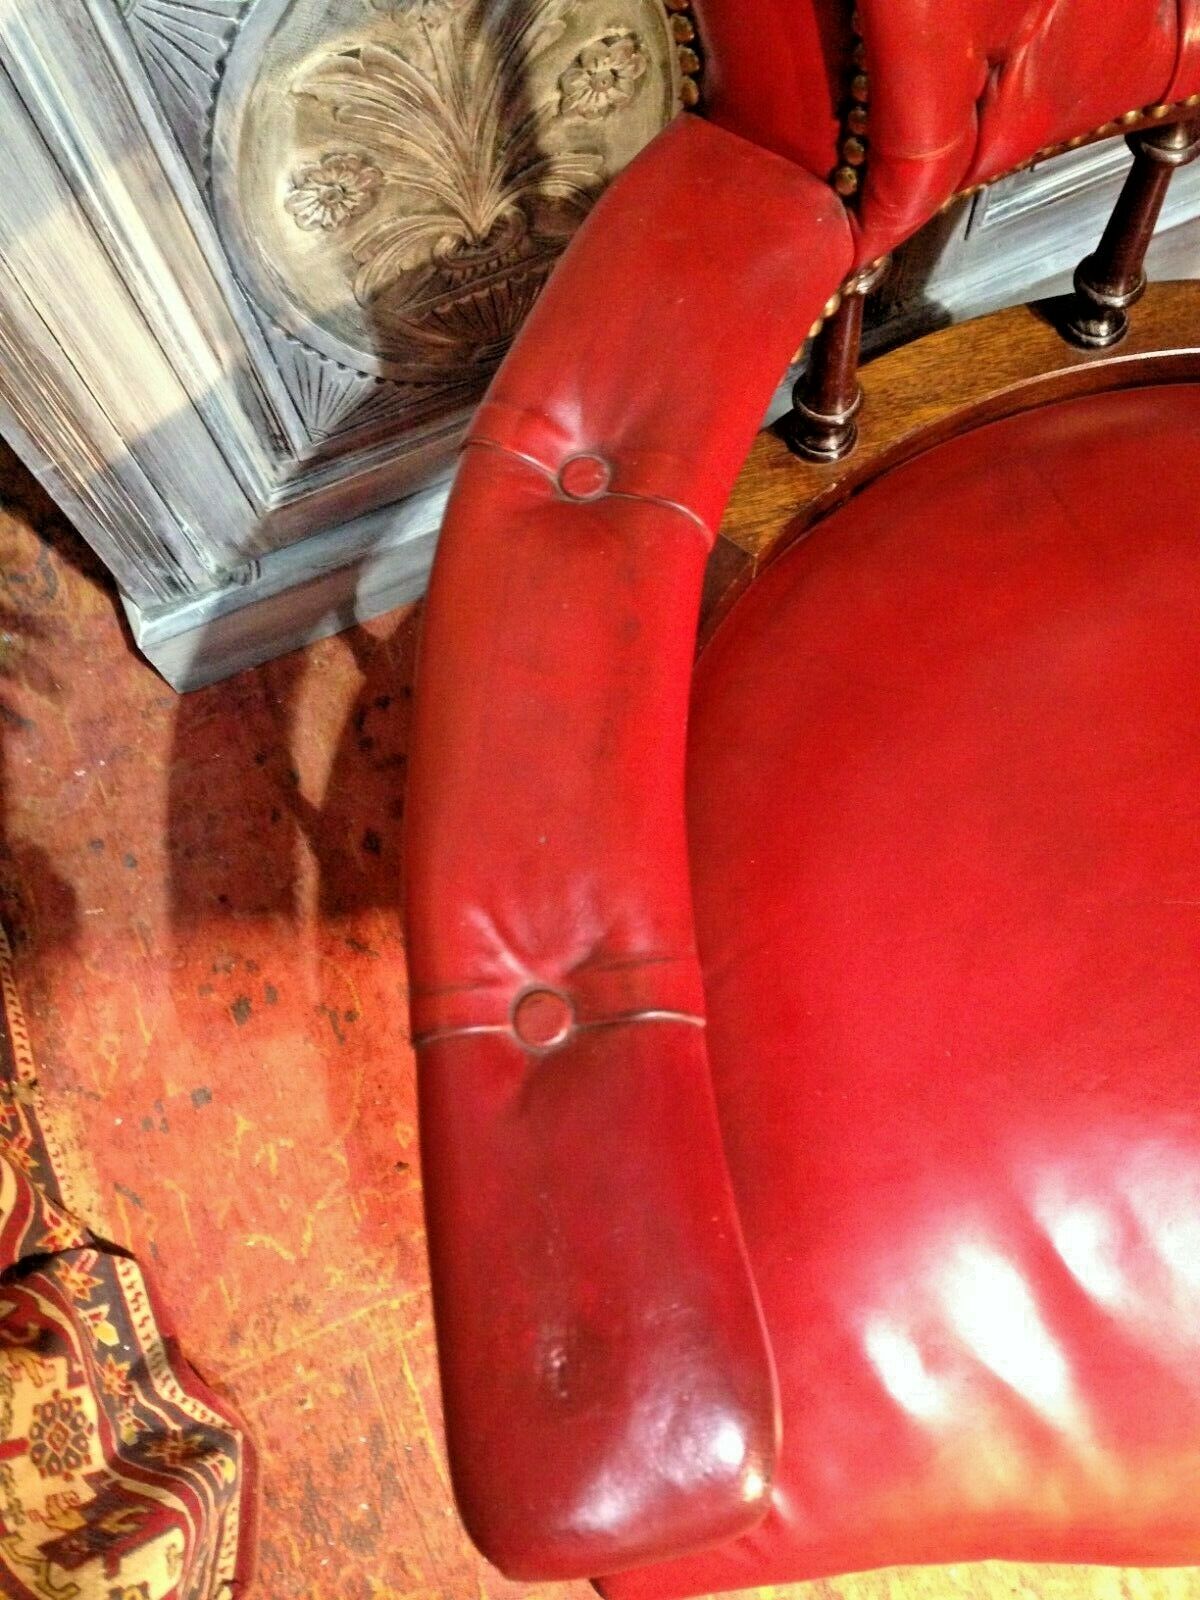 237.....Vintage Leather Captains Chair / Vintage Leather Revolving Desk Chair